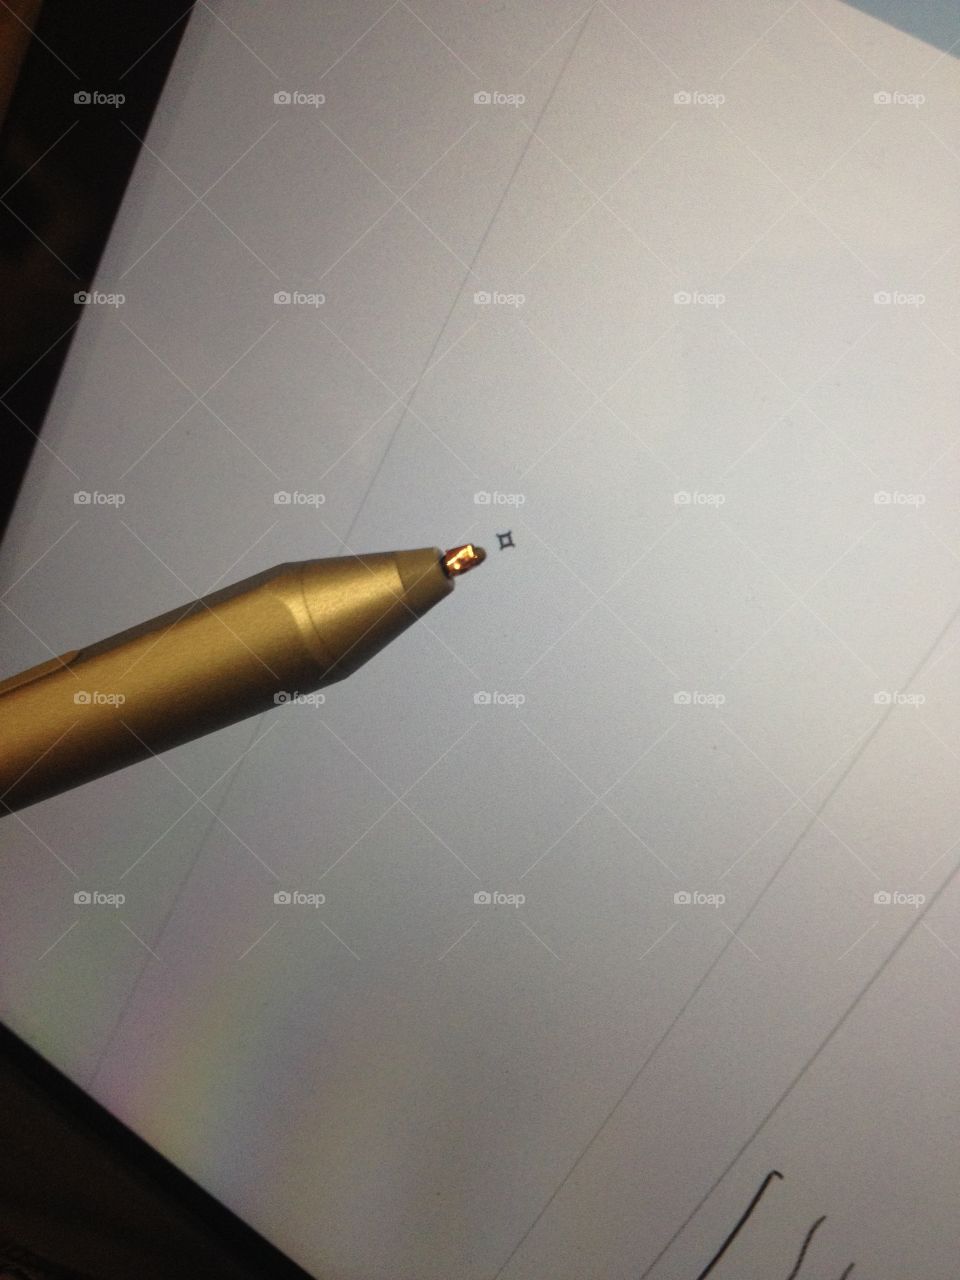 Pointers surface pro pen